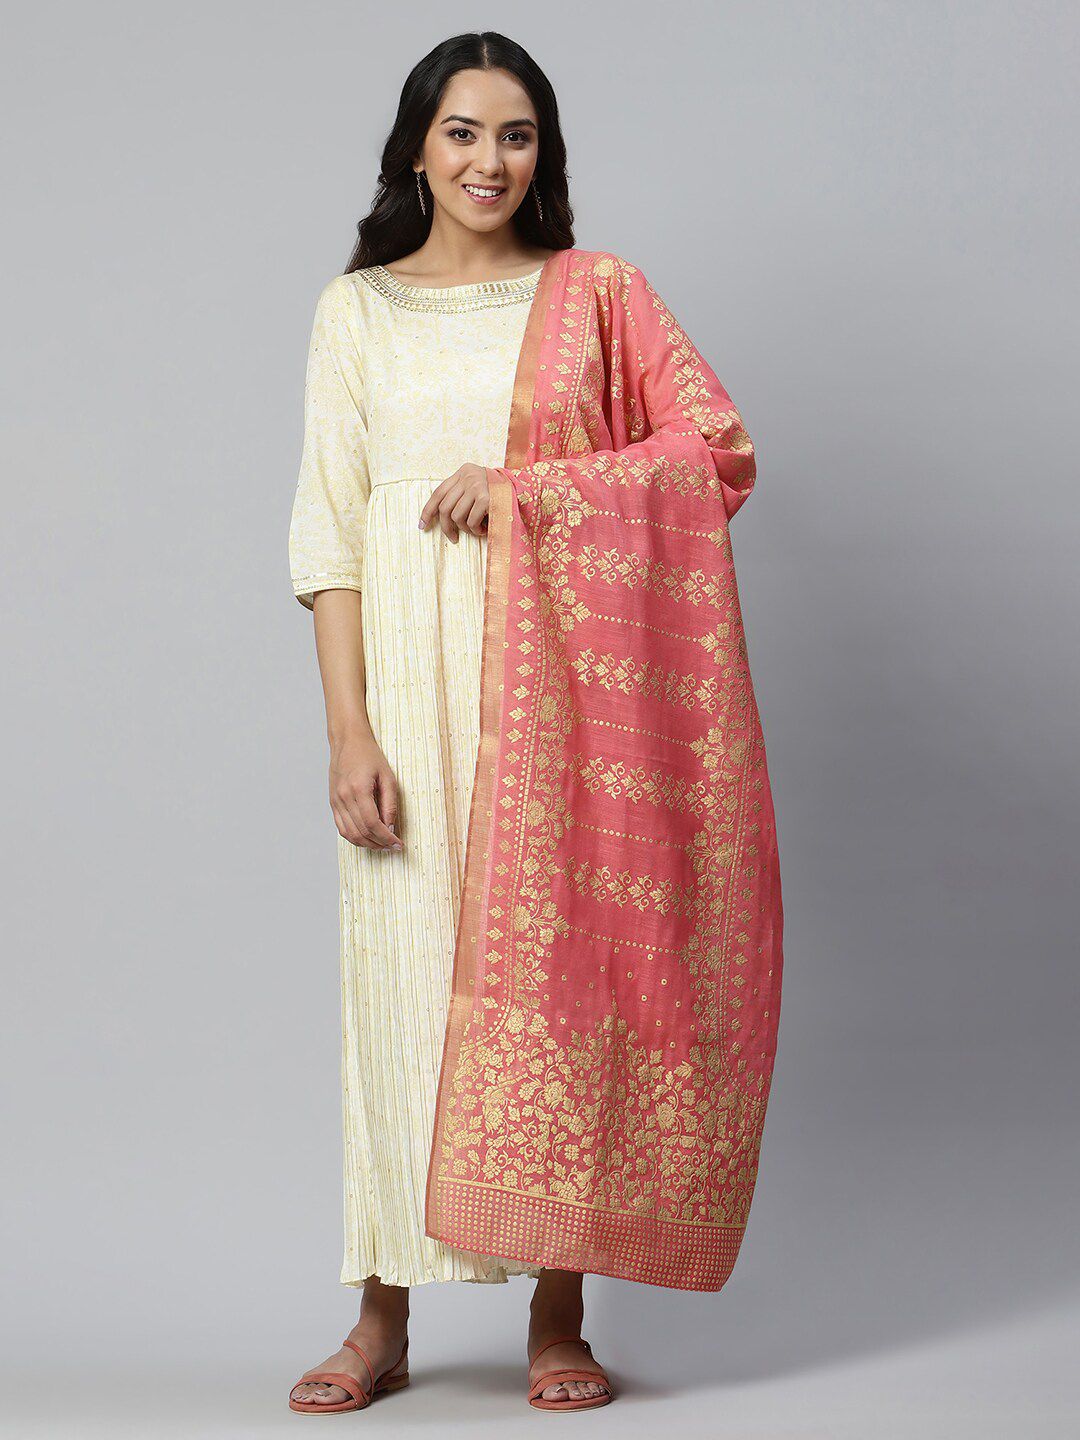 AURELIA White Ethnic Motifs Satin Maxi Dress Price in India